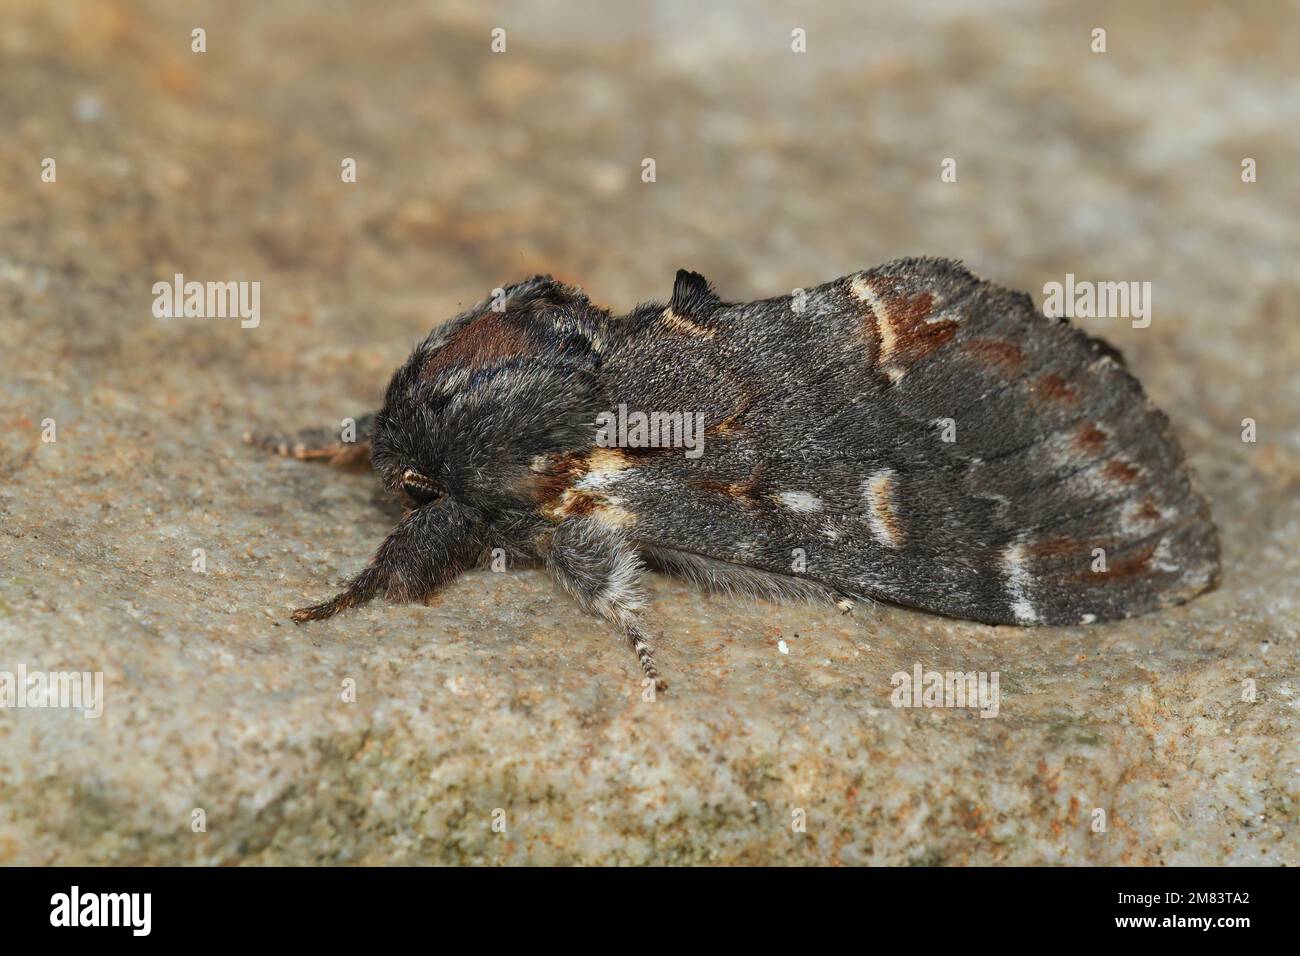 Detailed closeup on an Iron prominent moth, Notodonta dromedarius, sitting on stone Stock Photo